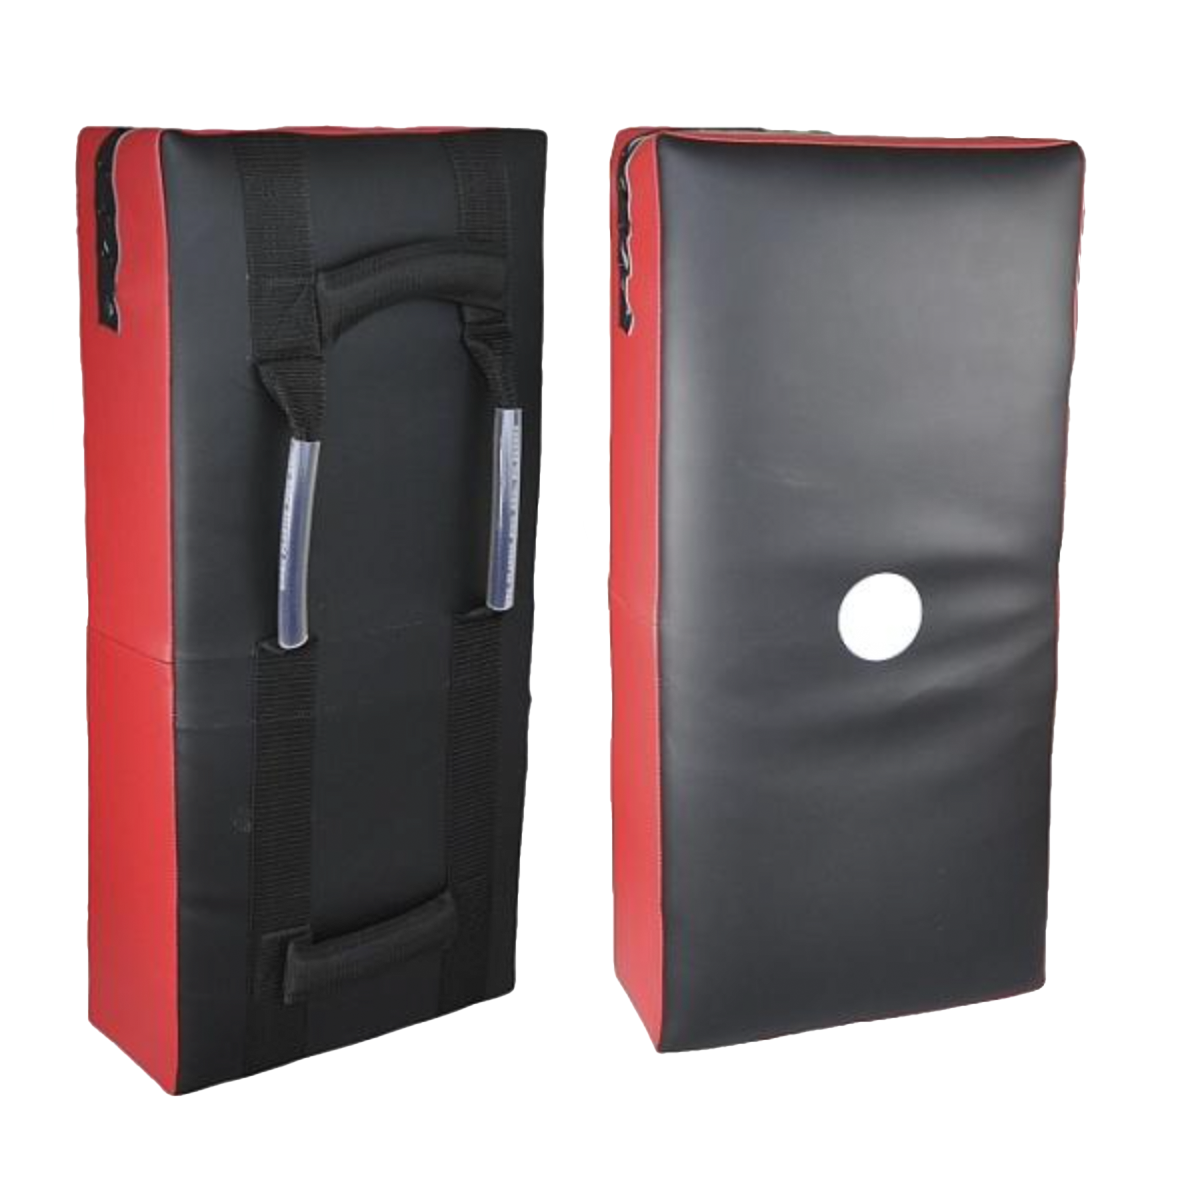 Strike pad imitation leather red-black